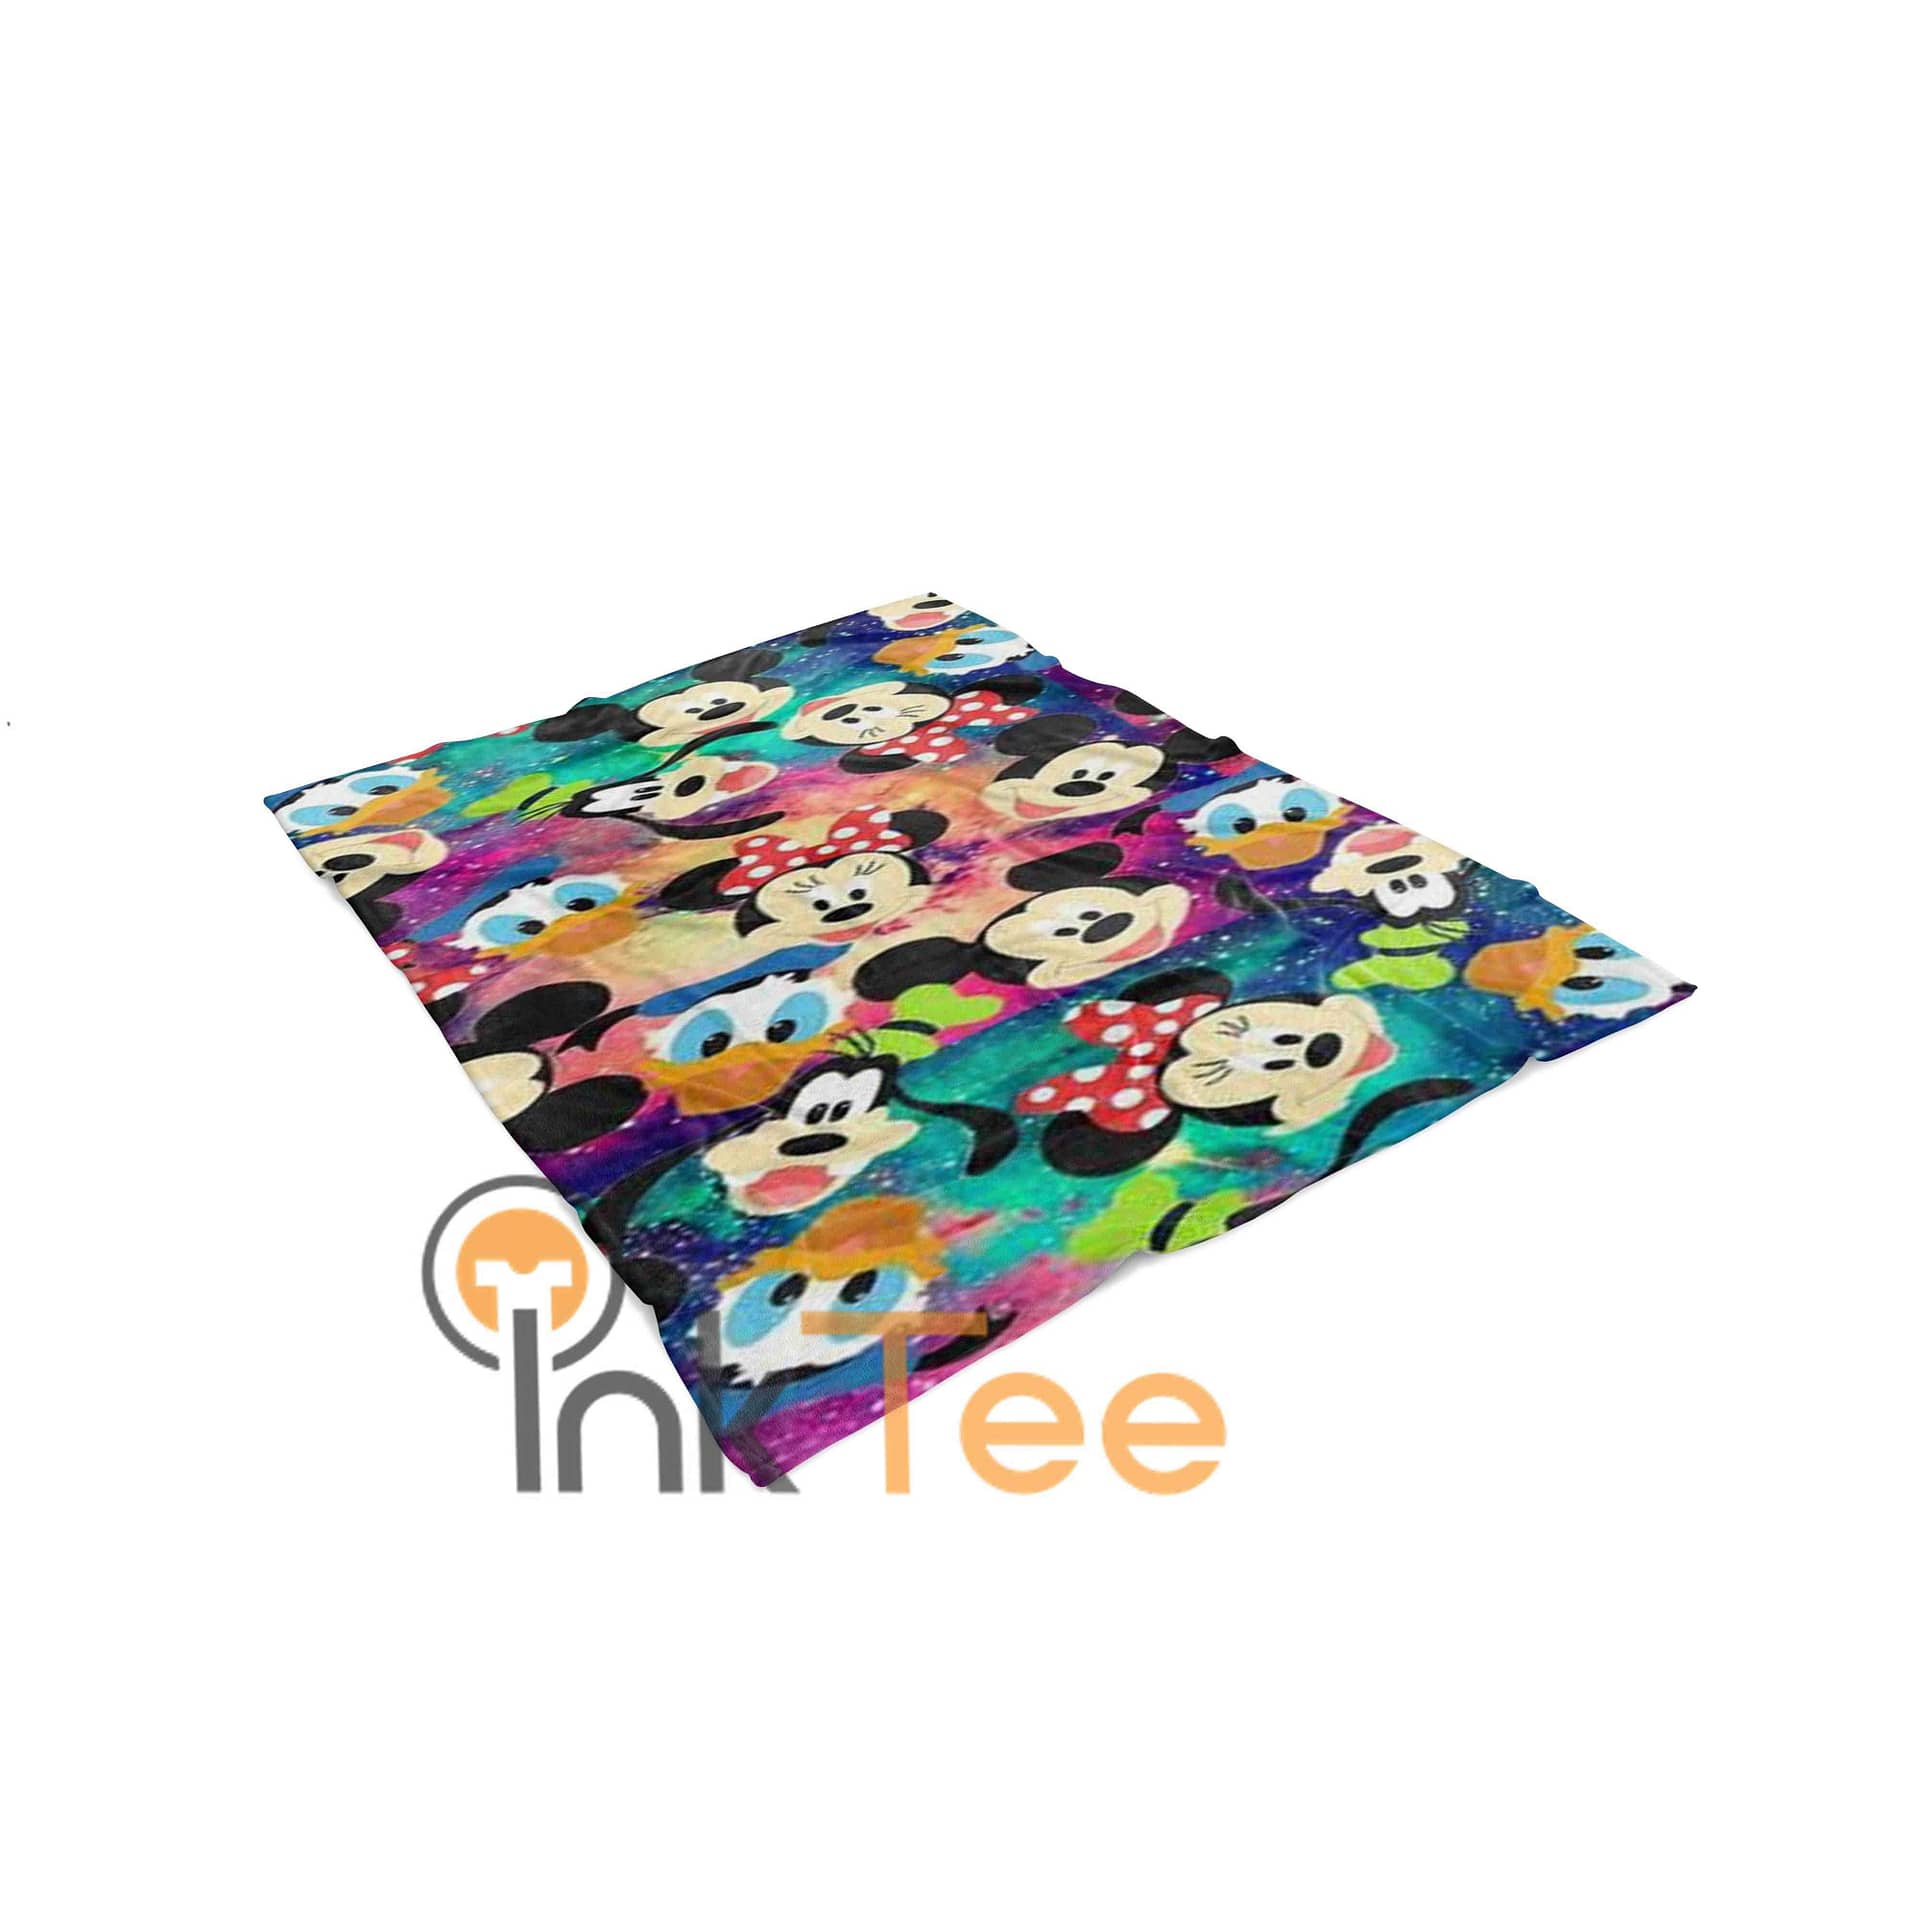 Inktee Store - Disney Cartoon Characters Limited Edition Area Amazon Best Seller 4104 Fleece Blanket Image